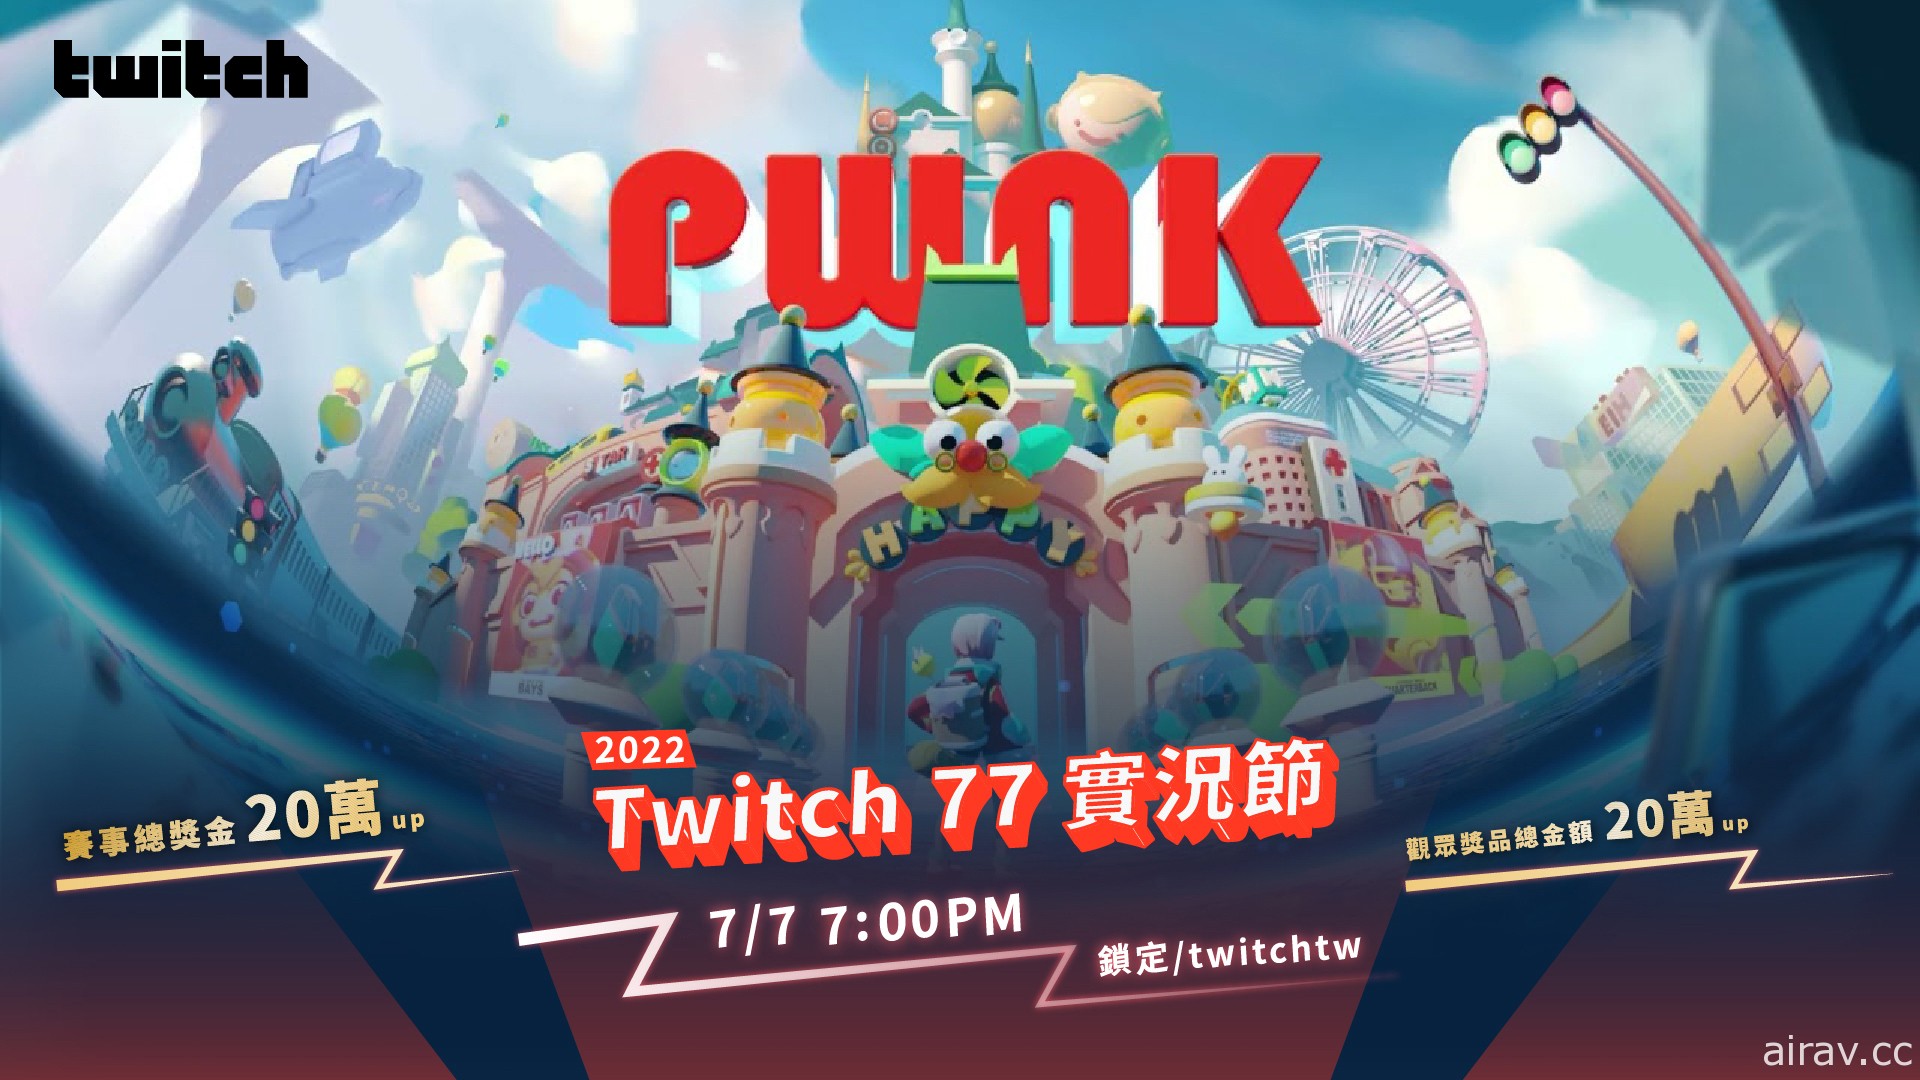 Twitch 將舉辦 77 實況節 邀請觀眾參加互動遊戲《Pwnk》賽事